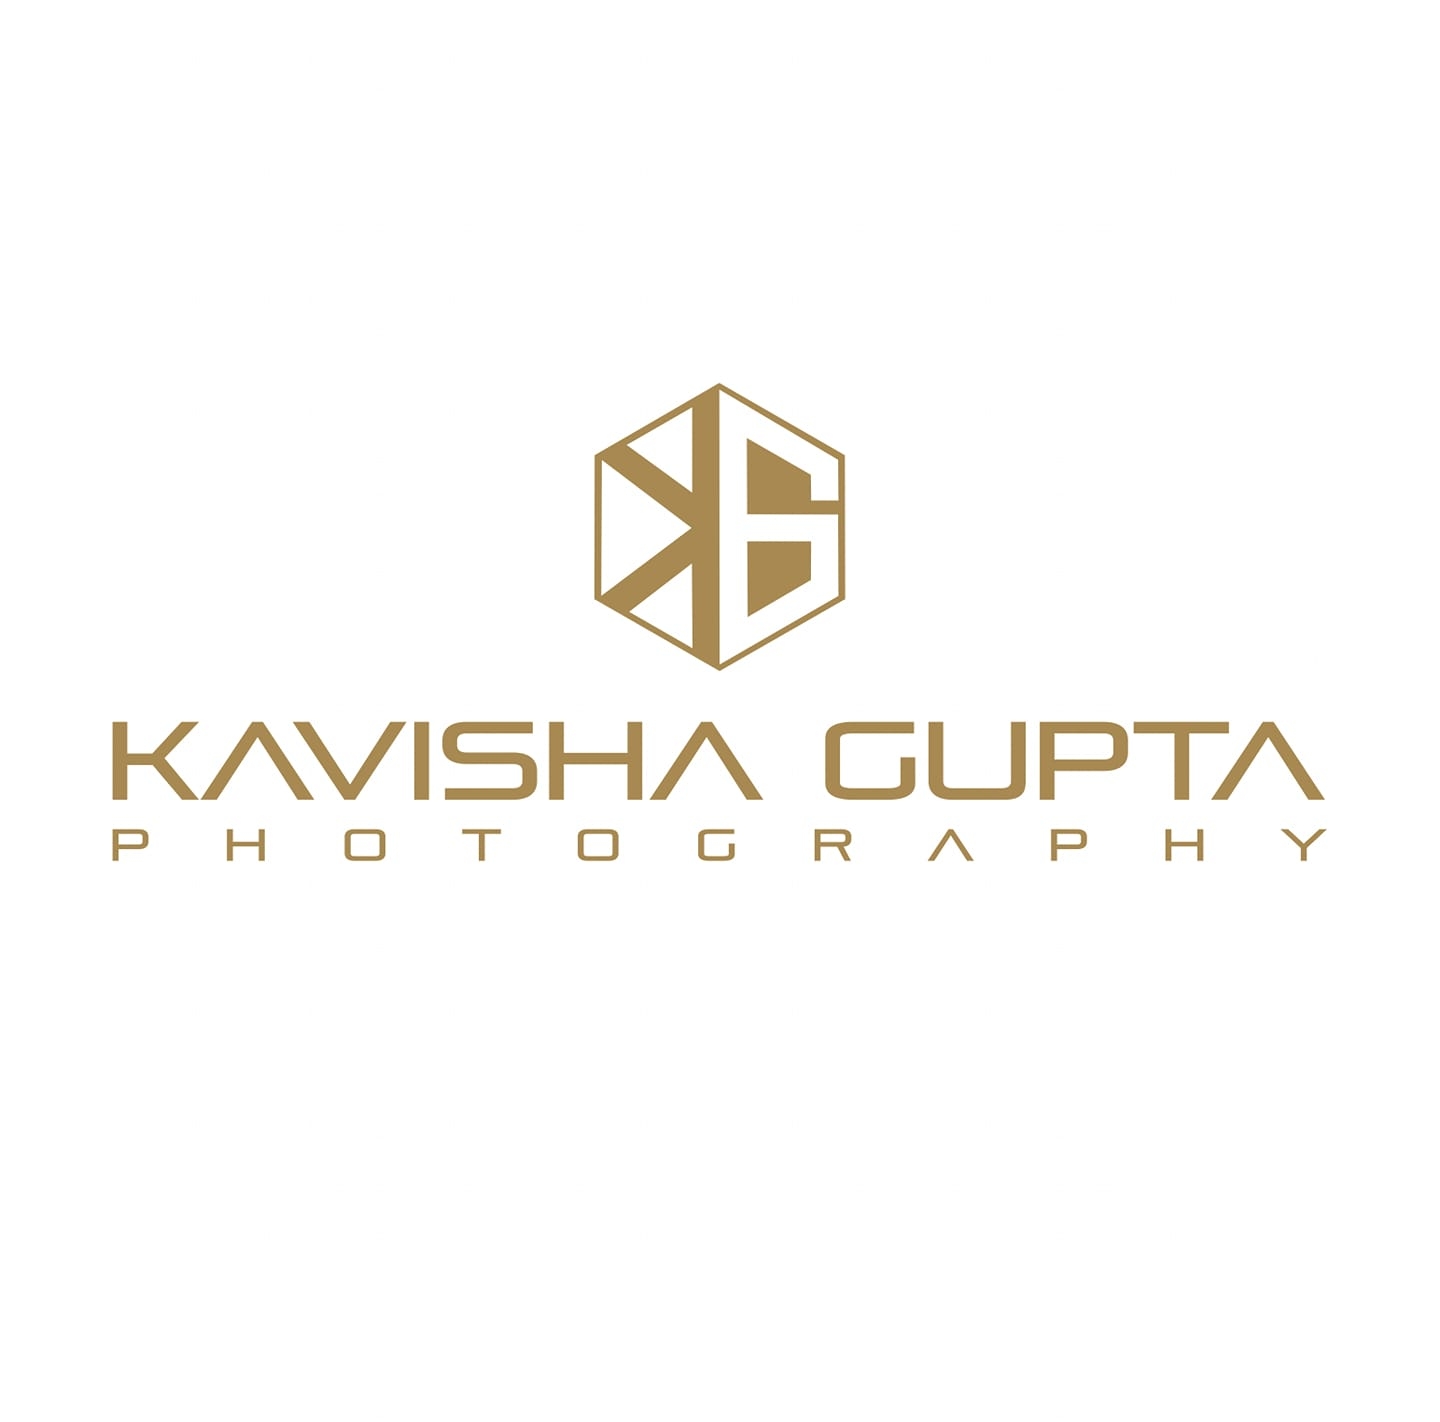 Kavisha Gupta Photography|Catering Services|Event Services